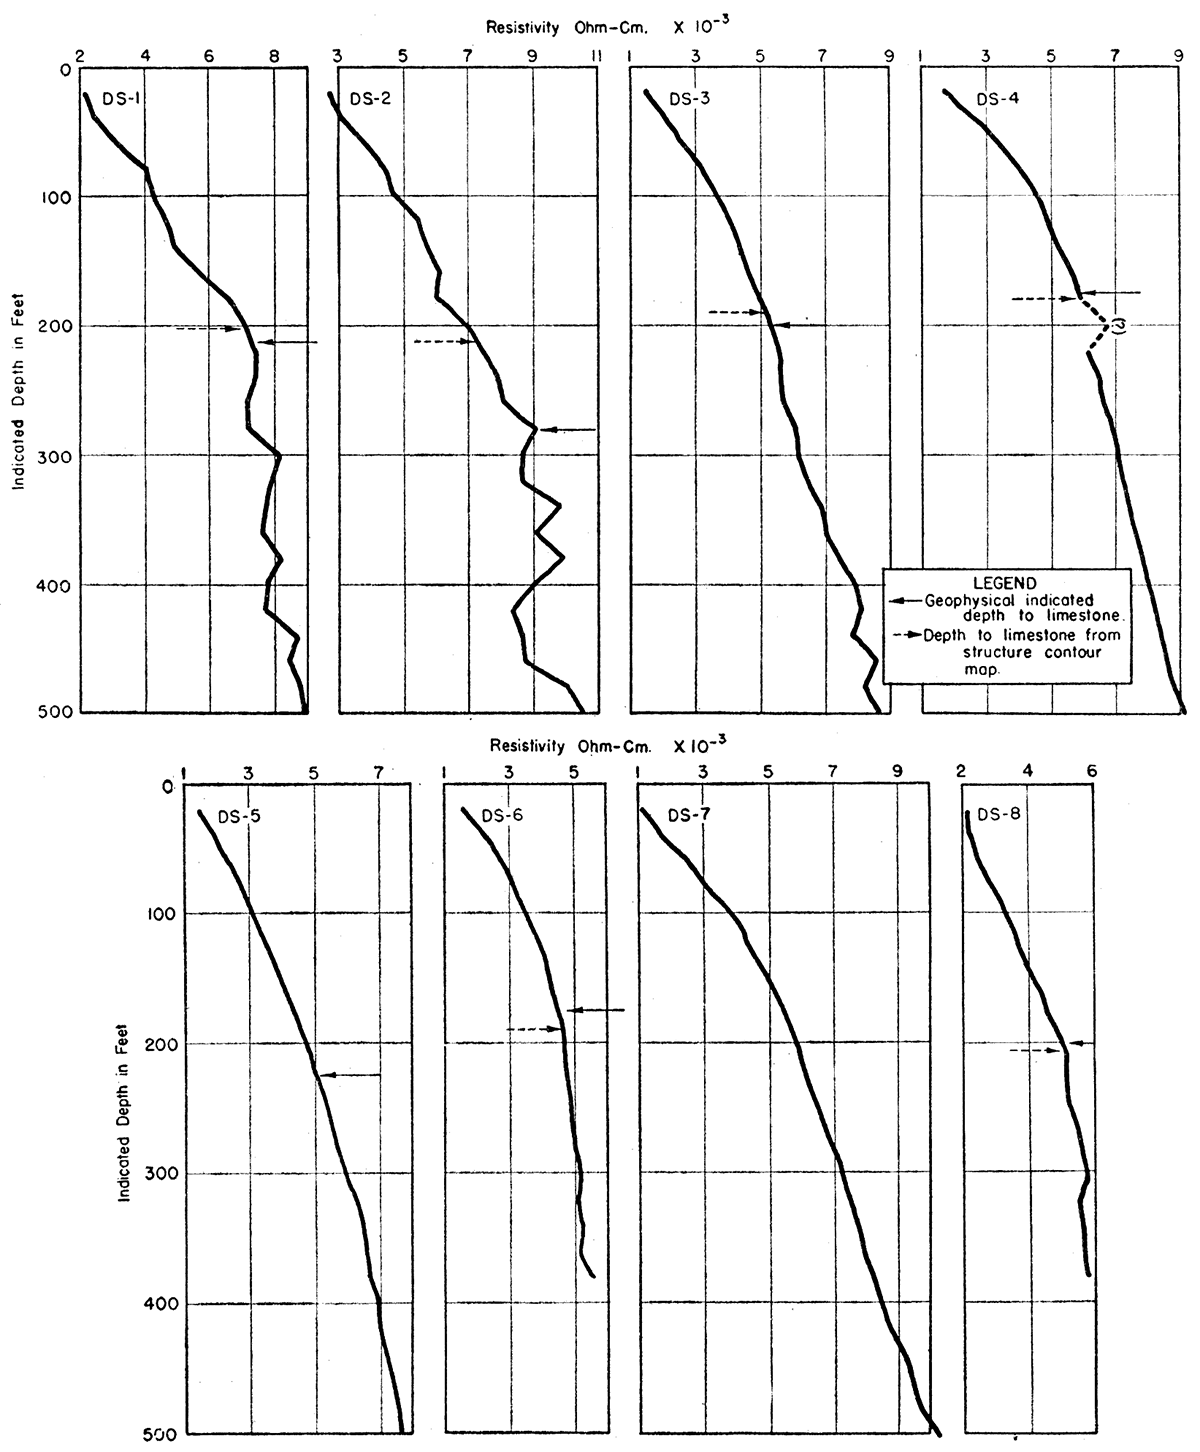 Resistivity depth profiles in the Walton area.